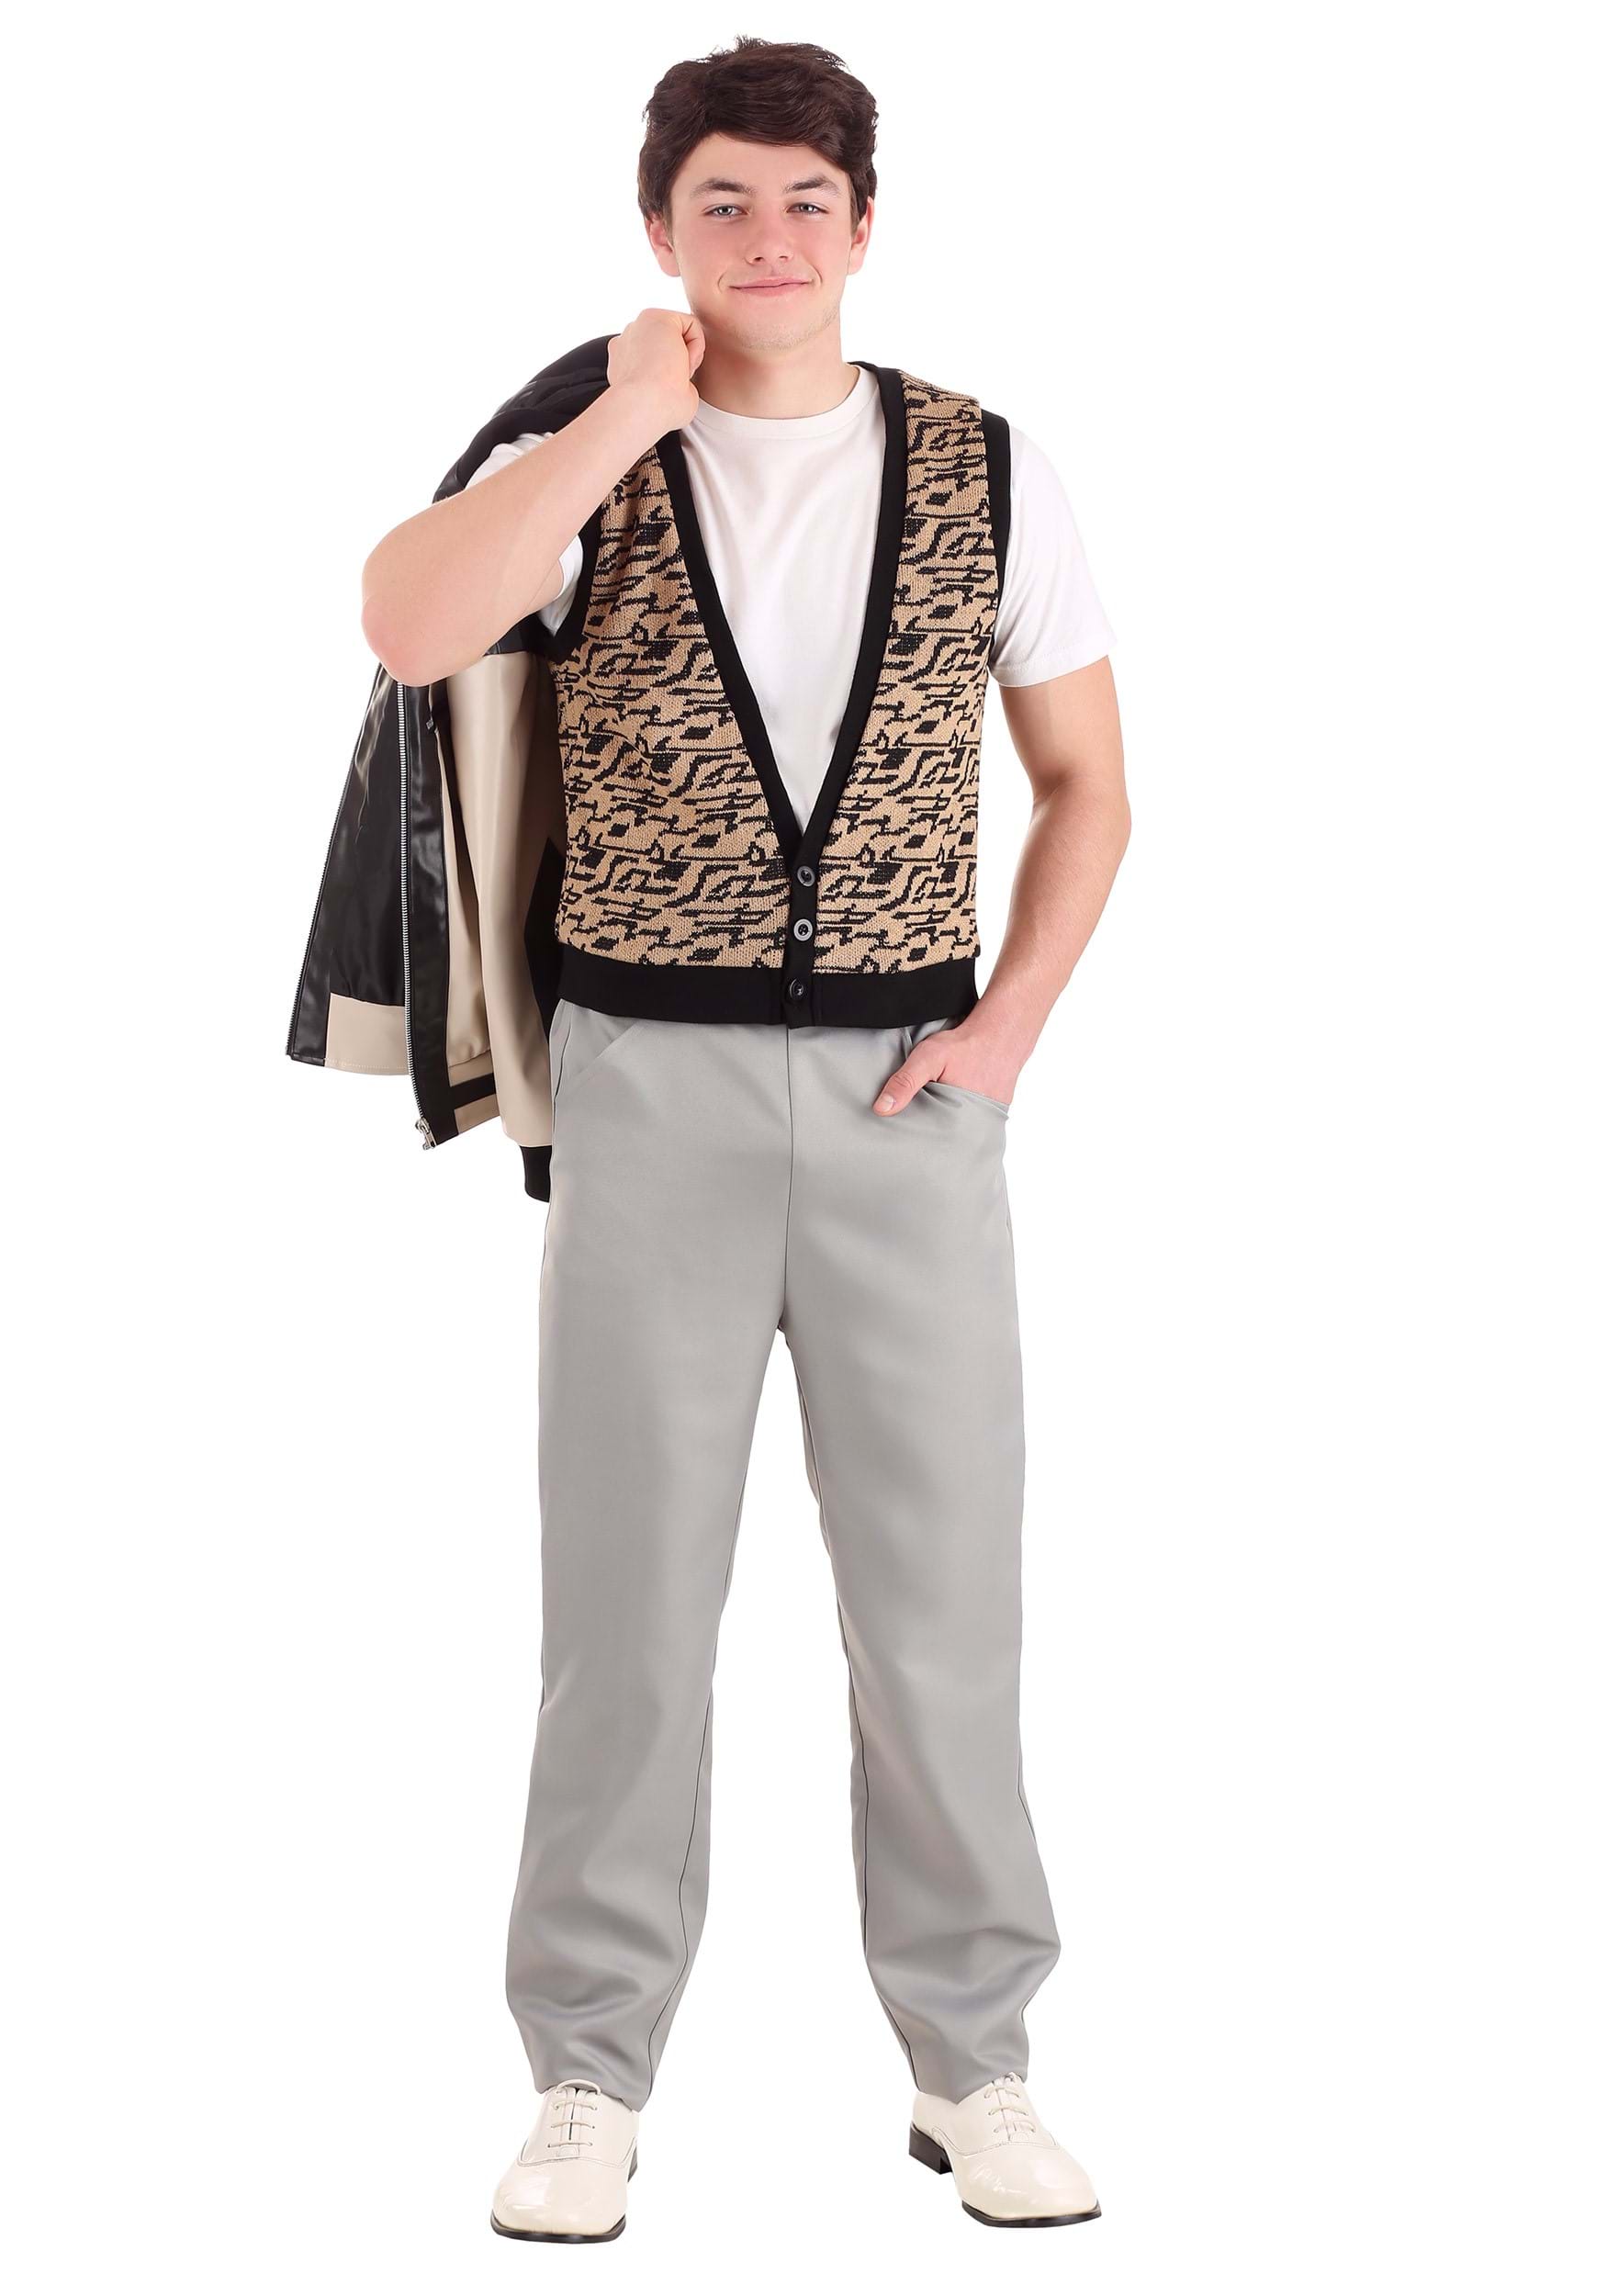 Best Ferris Bueller Costume Ideas - How to Dress Like Ferris Bueller for  Halloween